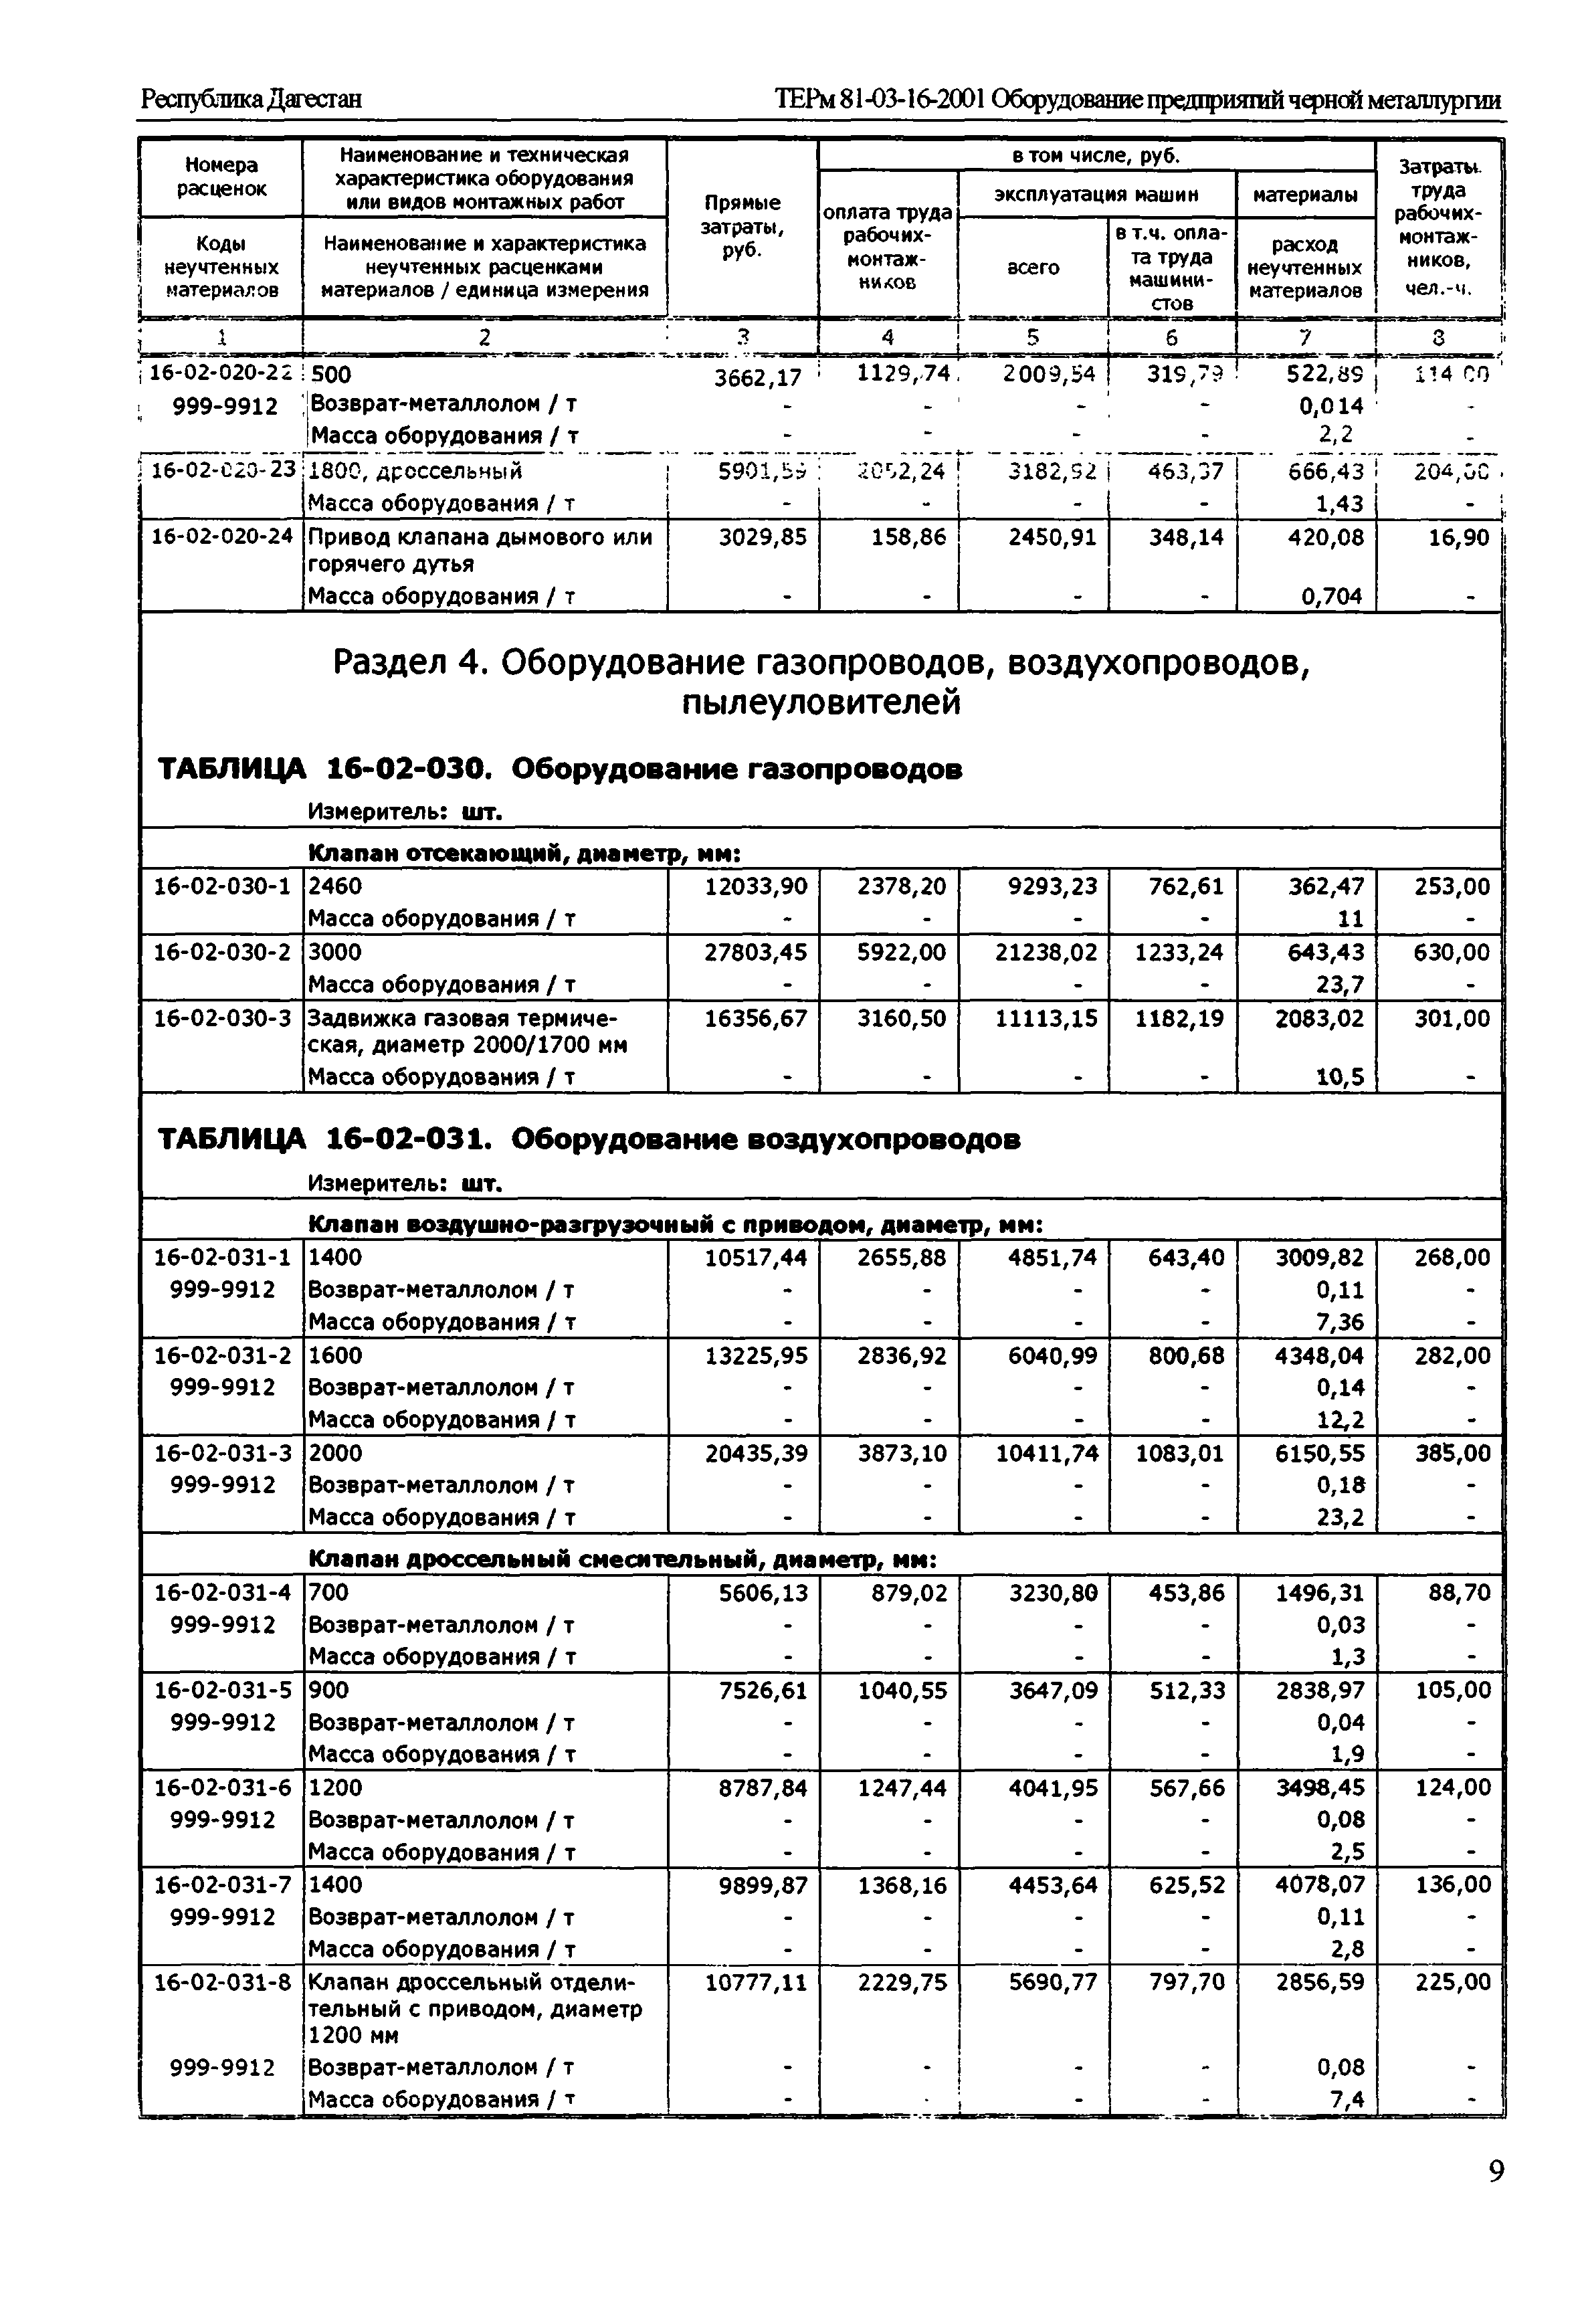 ТЕРм Республика Дагестан 2001-16